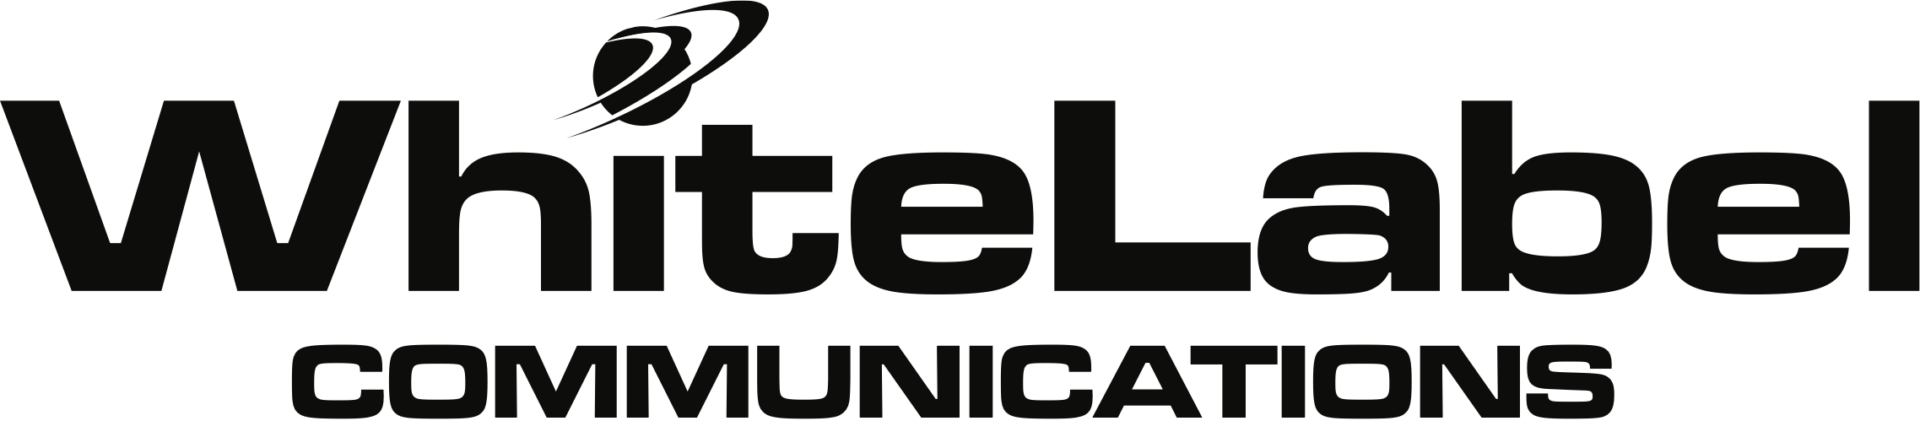 White Label Communications logo